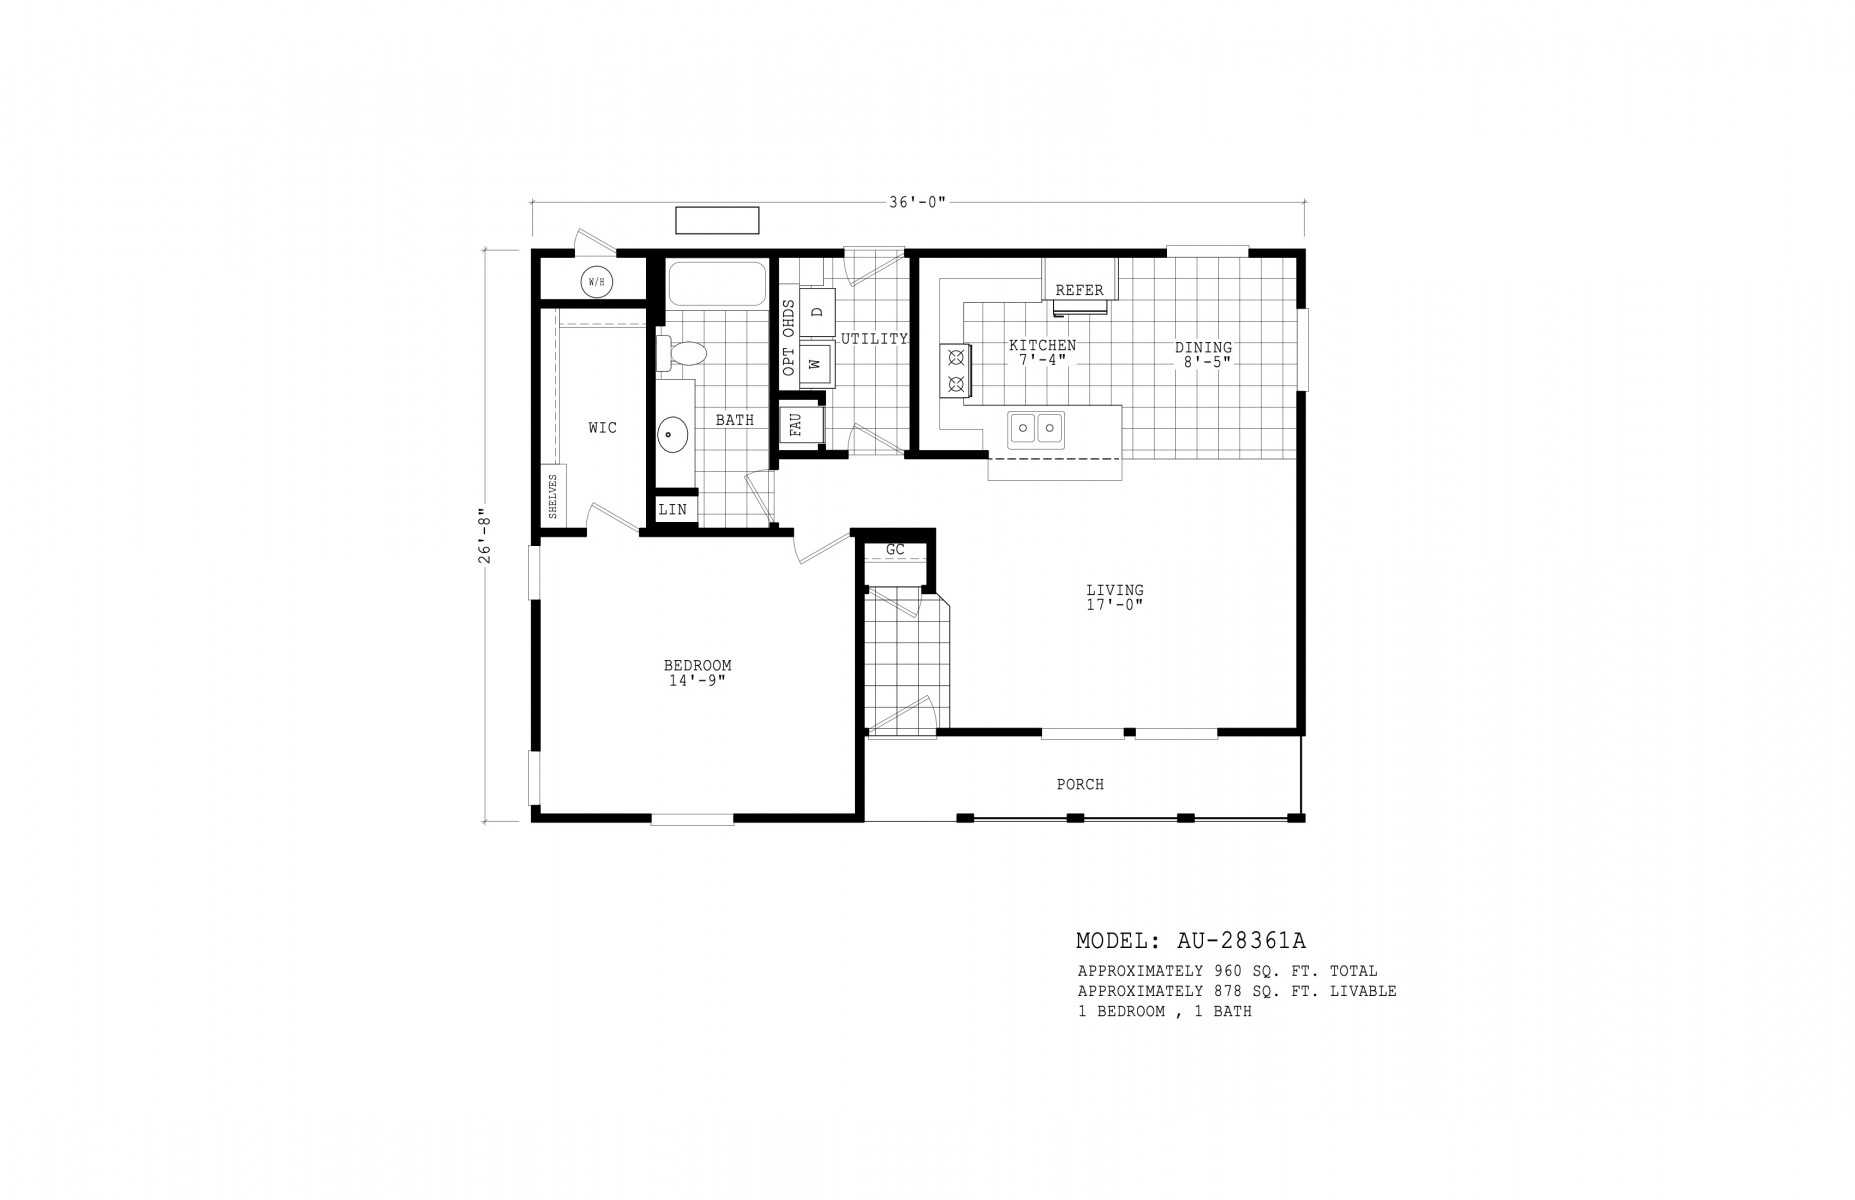 Homes Direct Modular Homes - Model AU28361A - Floorplan